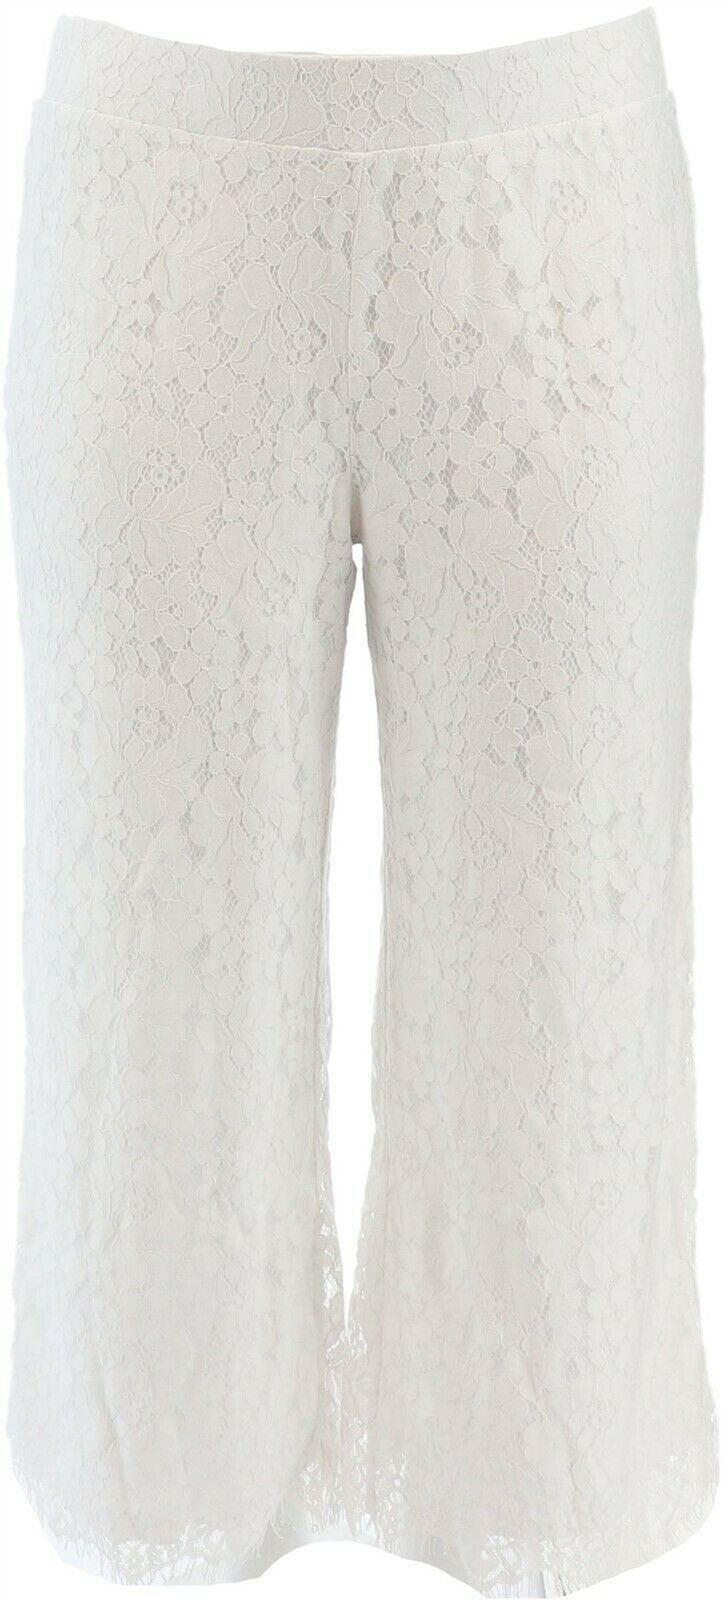 Isaac Mizrahi Tall Floral Lace Knit Culotte Pants Black 1X NEW A353086 